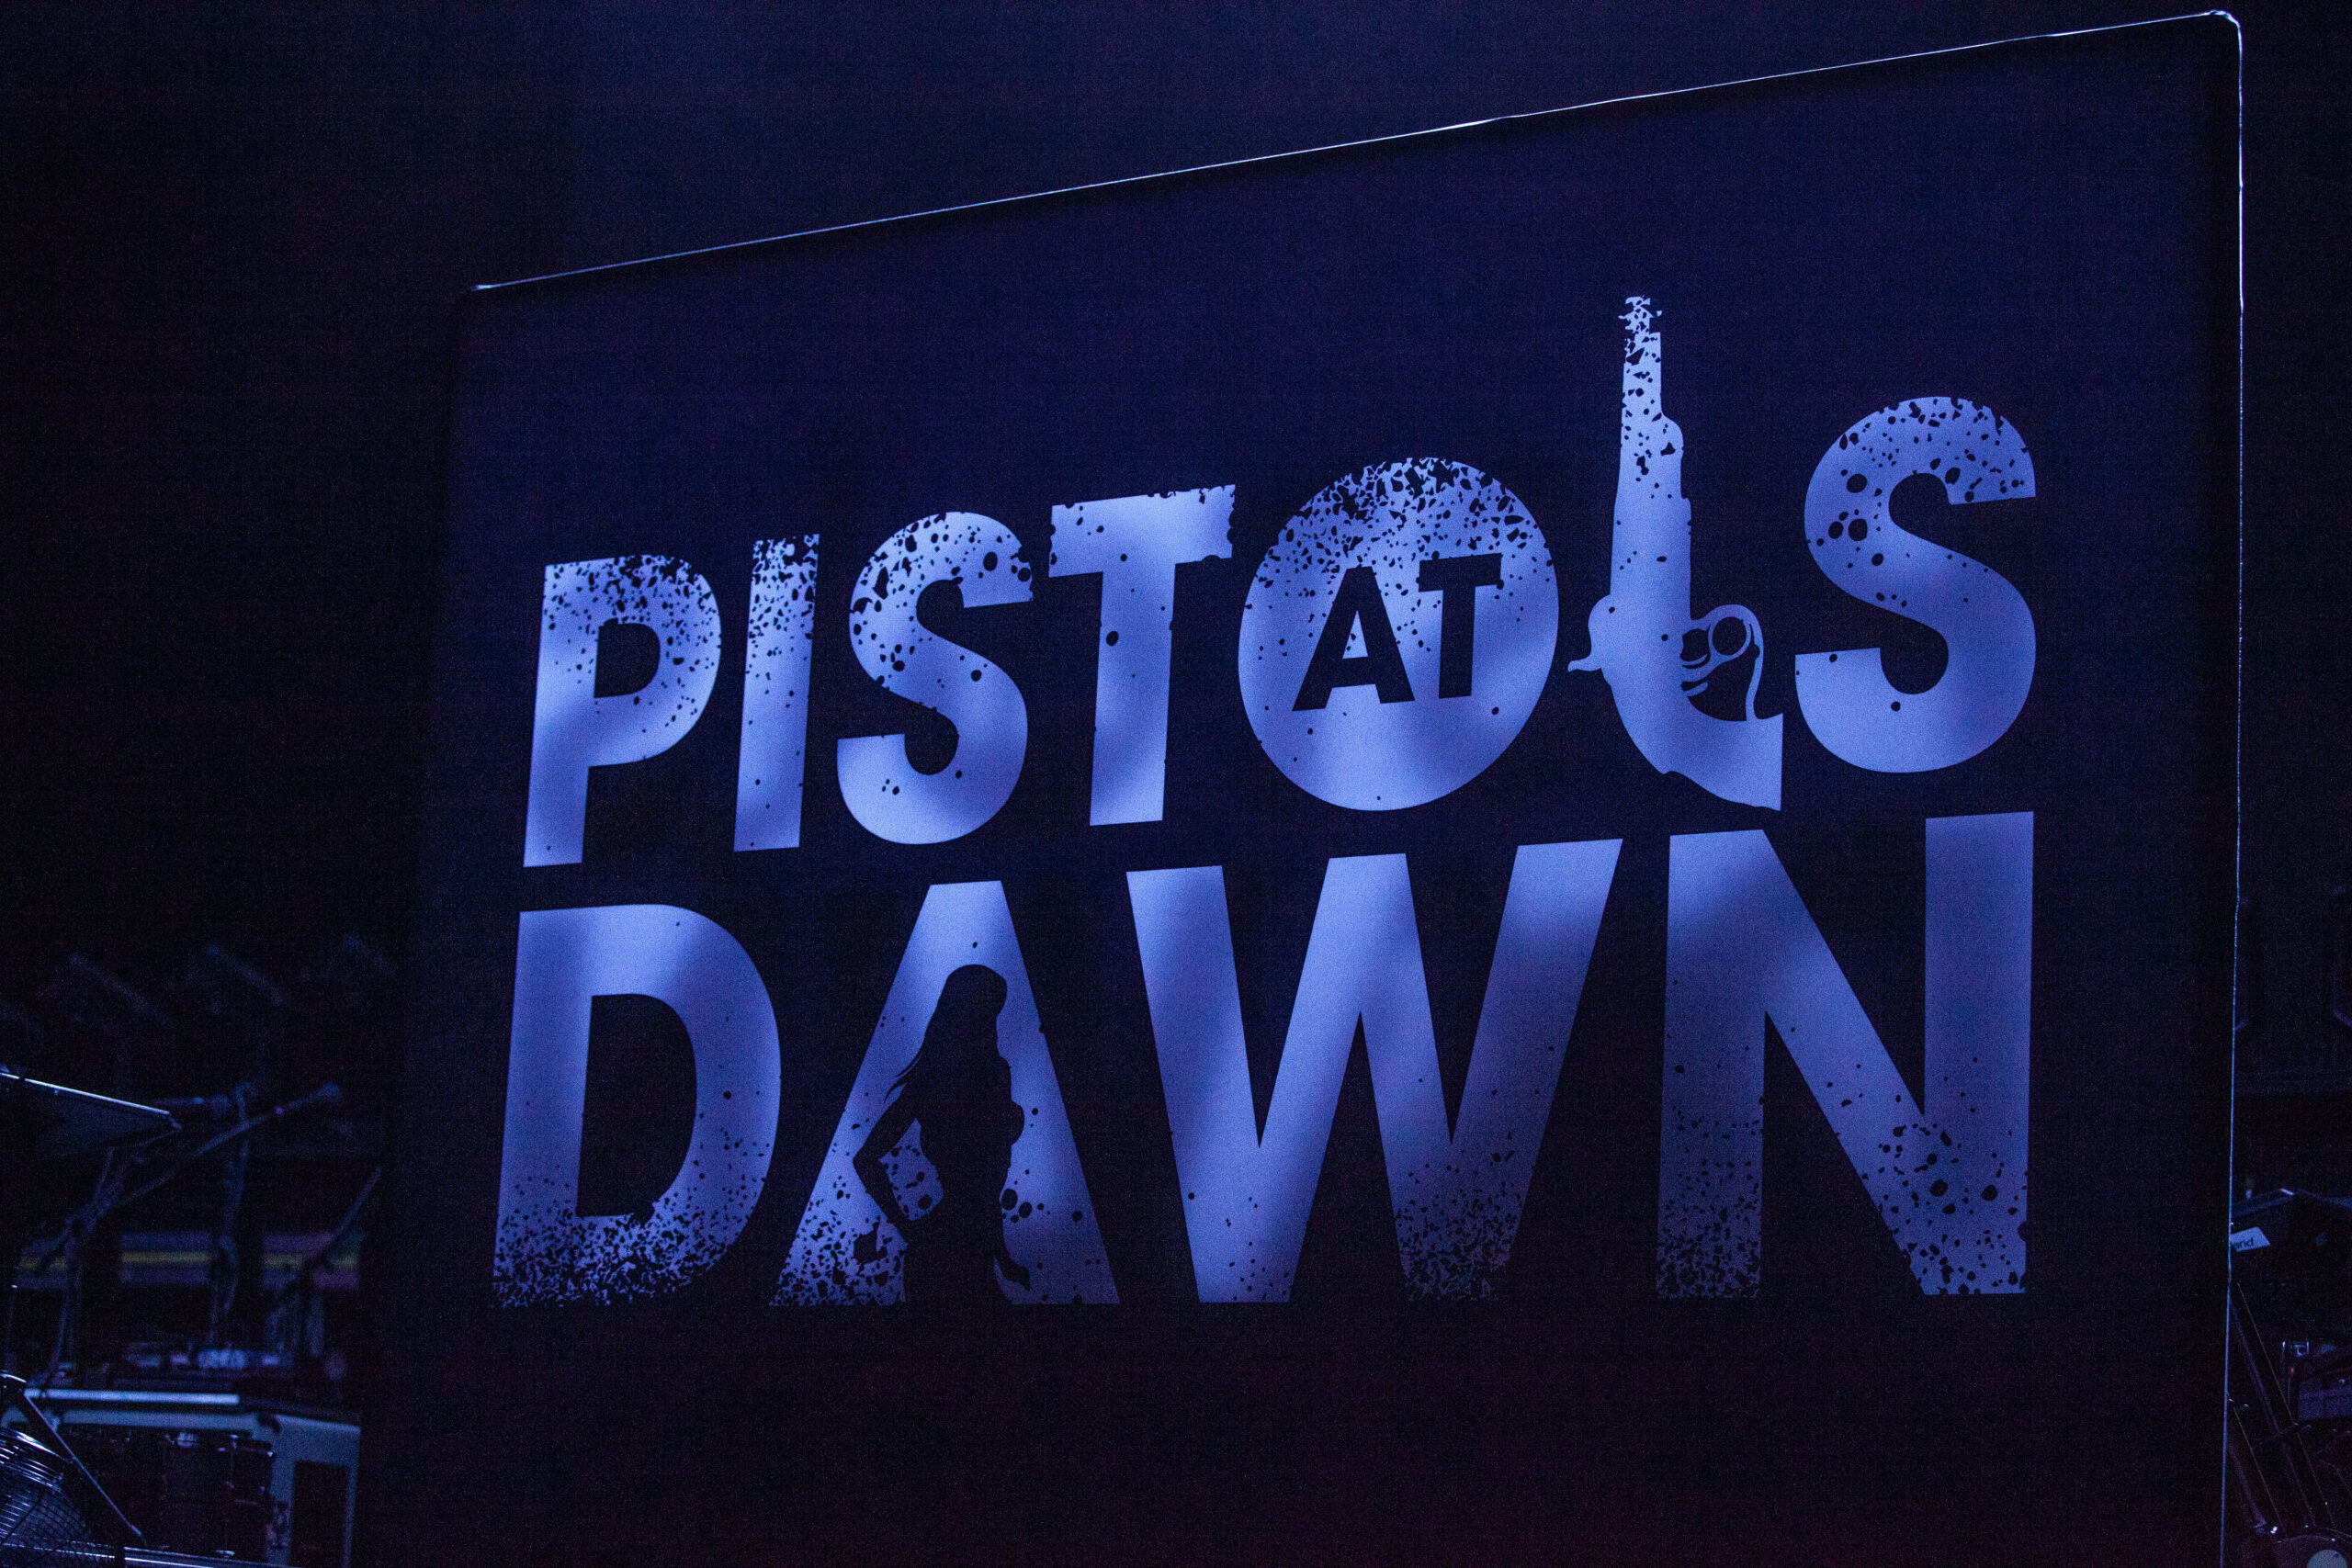 Pistols at Dawn photo by Jennifer Pinckney for HM Magazine